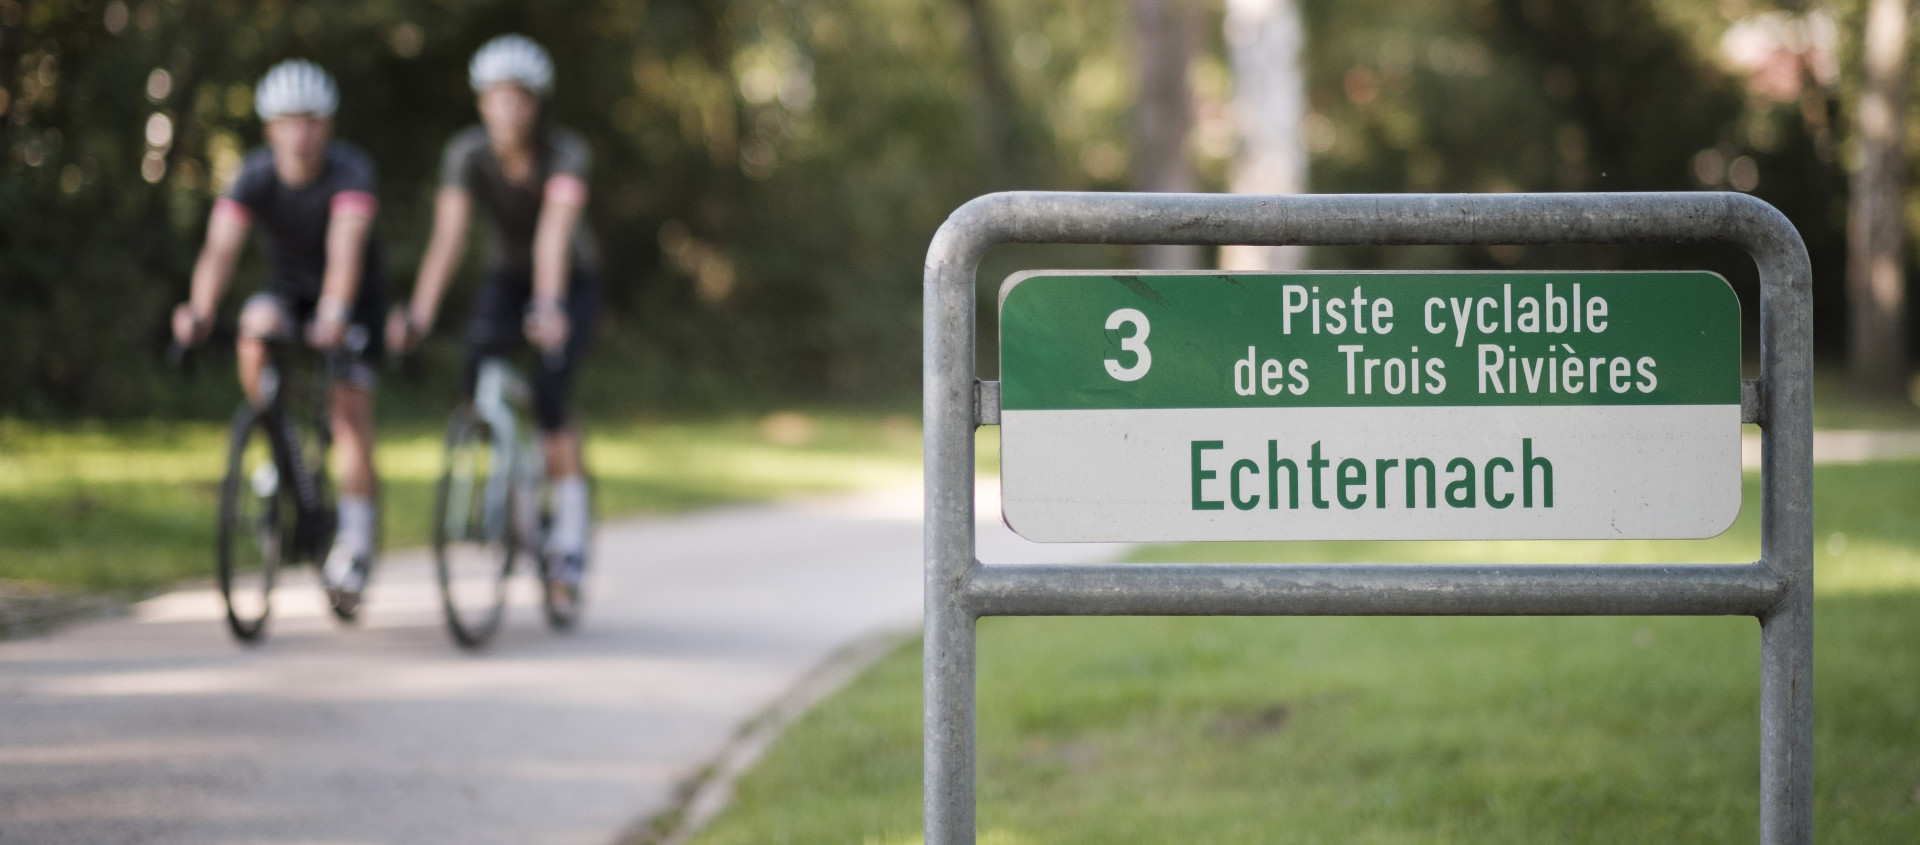 Echternach Park (c) Pancake! Photographie (4) v